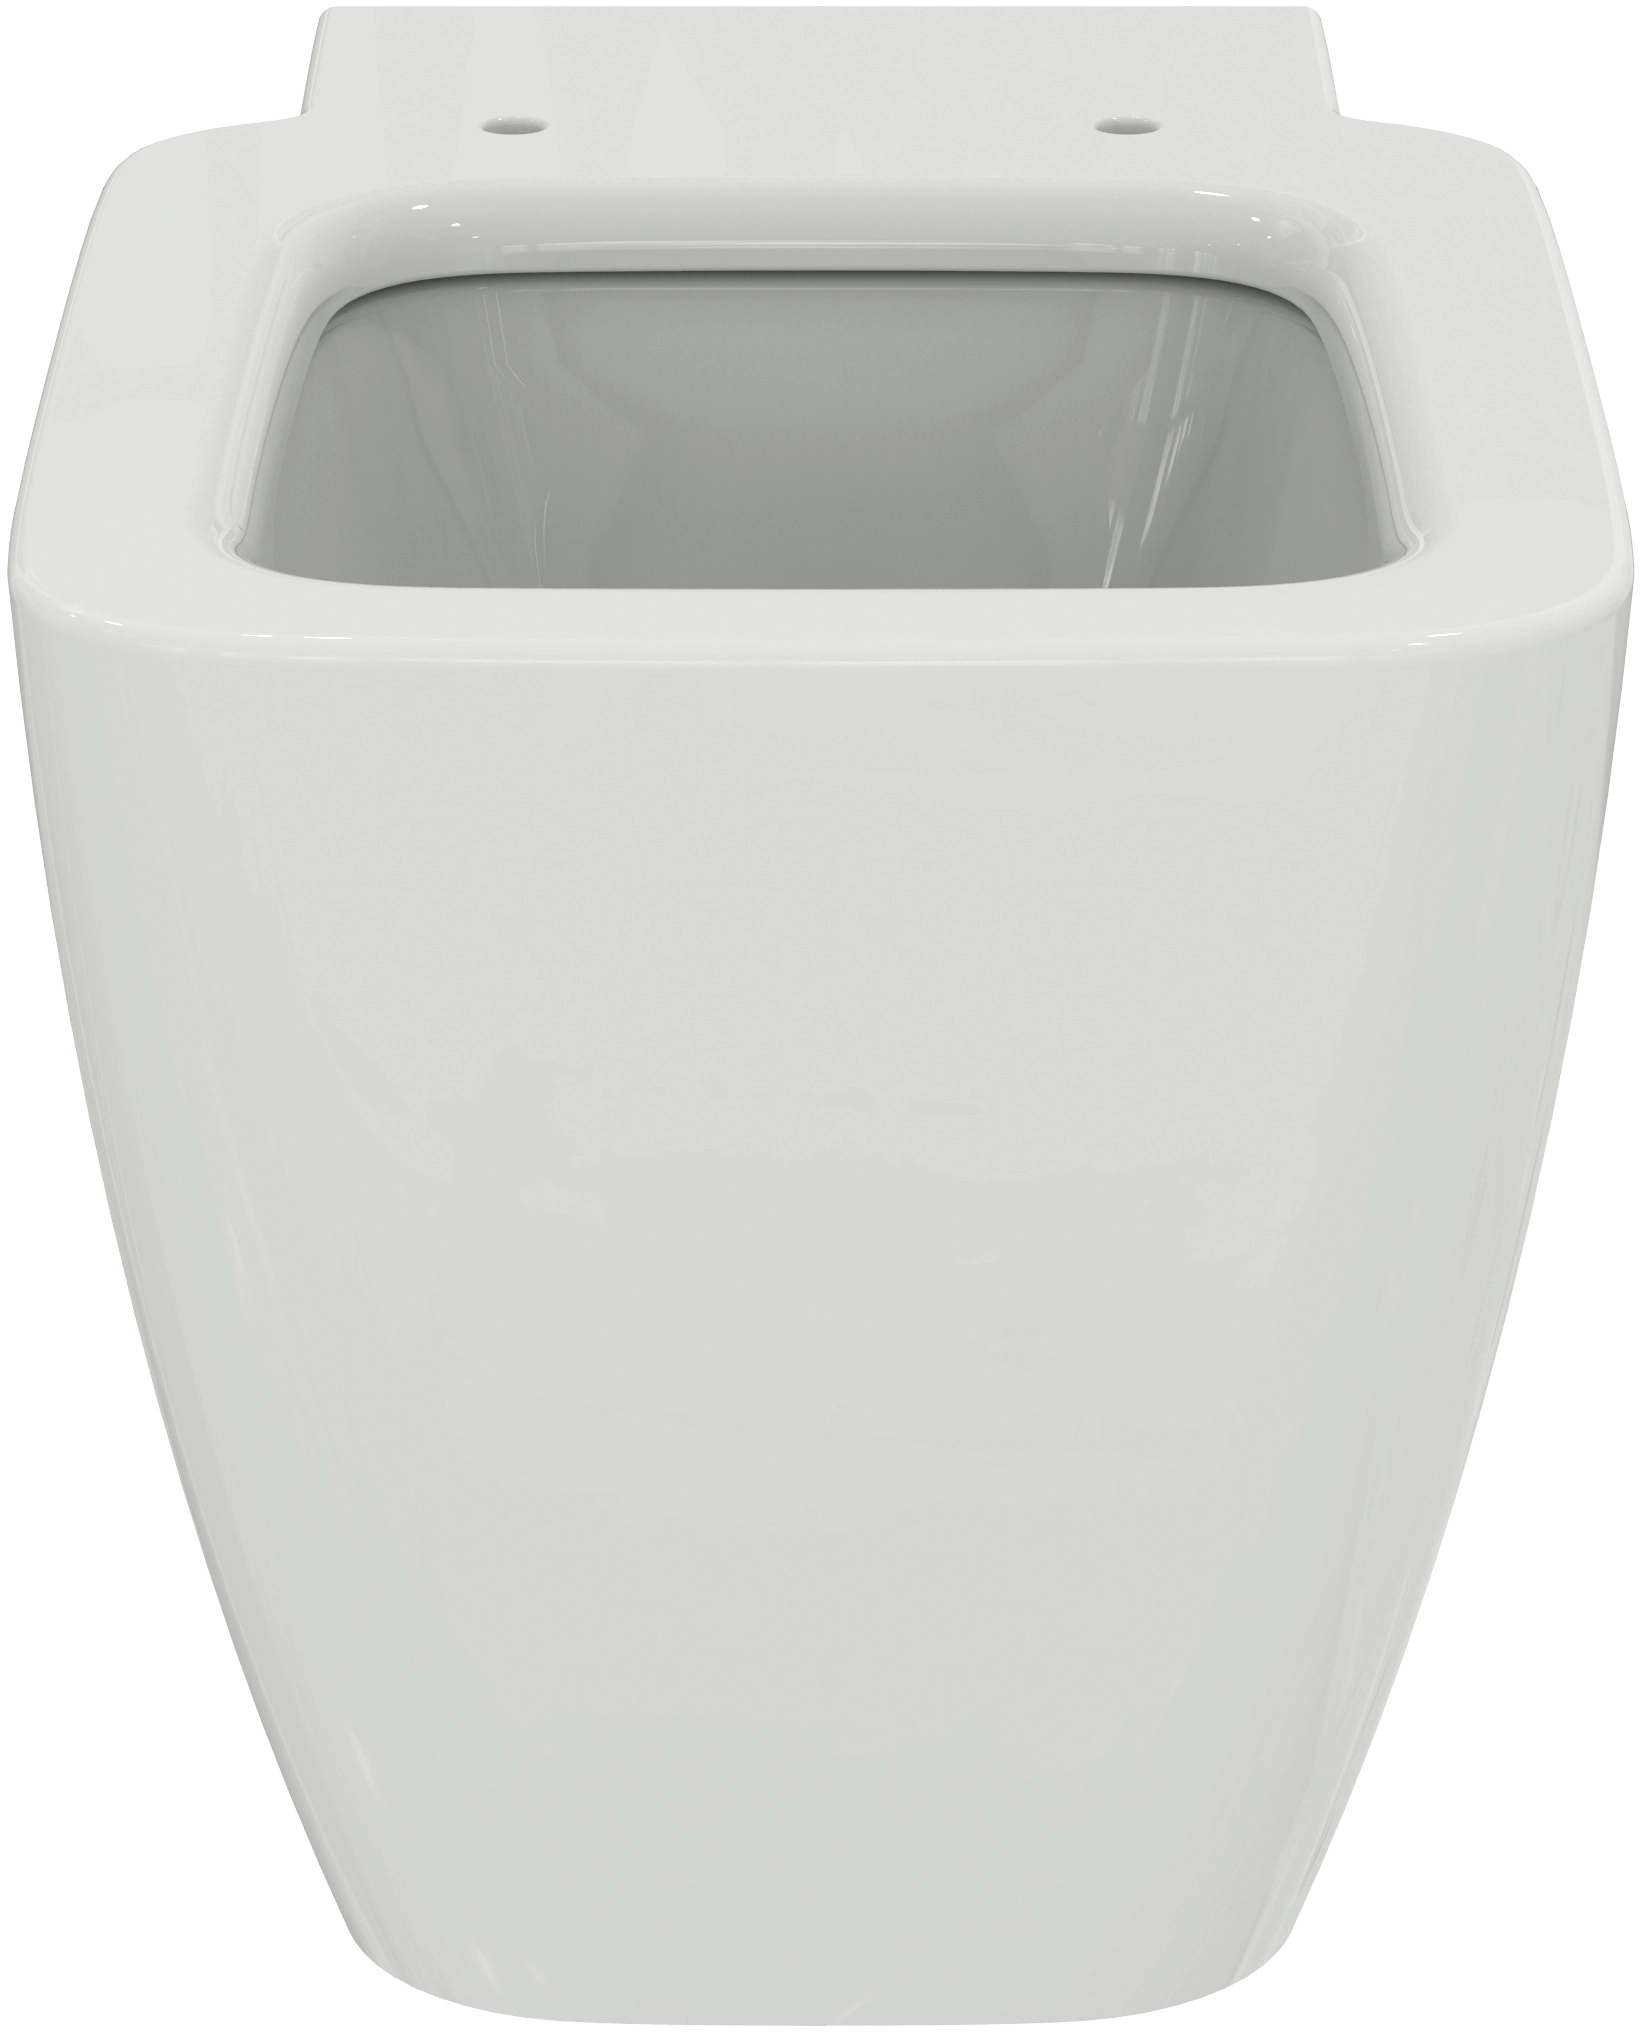 Ideal Standard Stand-WC Strada II Tiefspüler Weiß Spülrandlos AquaBlade  kaufen bei OBI